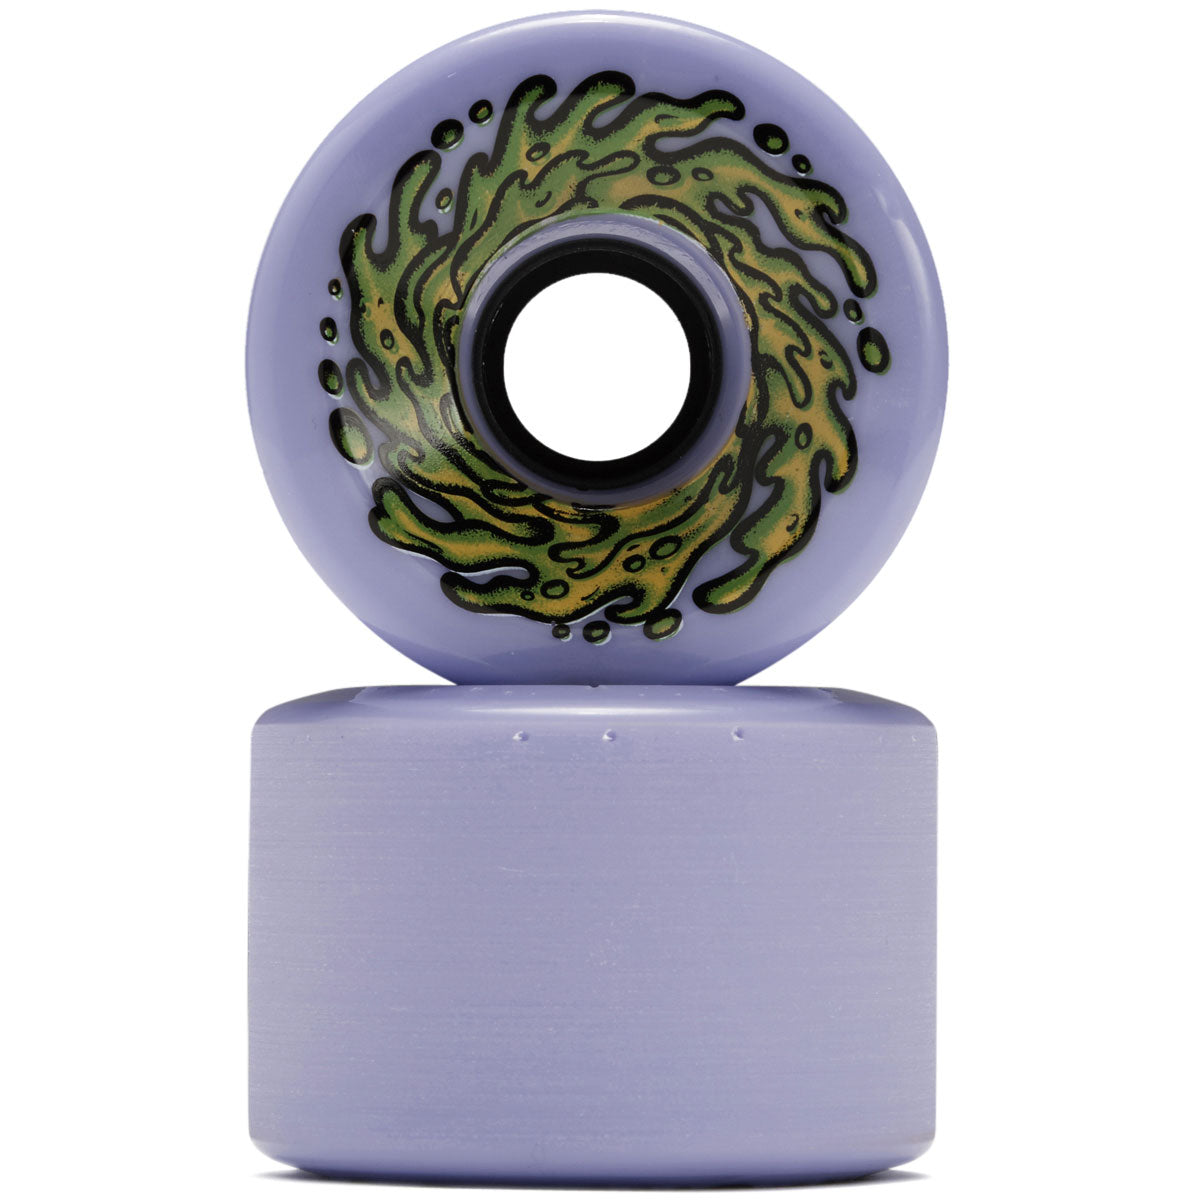 Slime Balls OG Slime 78a Skateboard Wheels - Purple - 66mm image 2